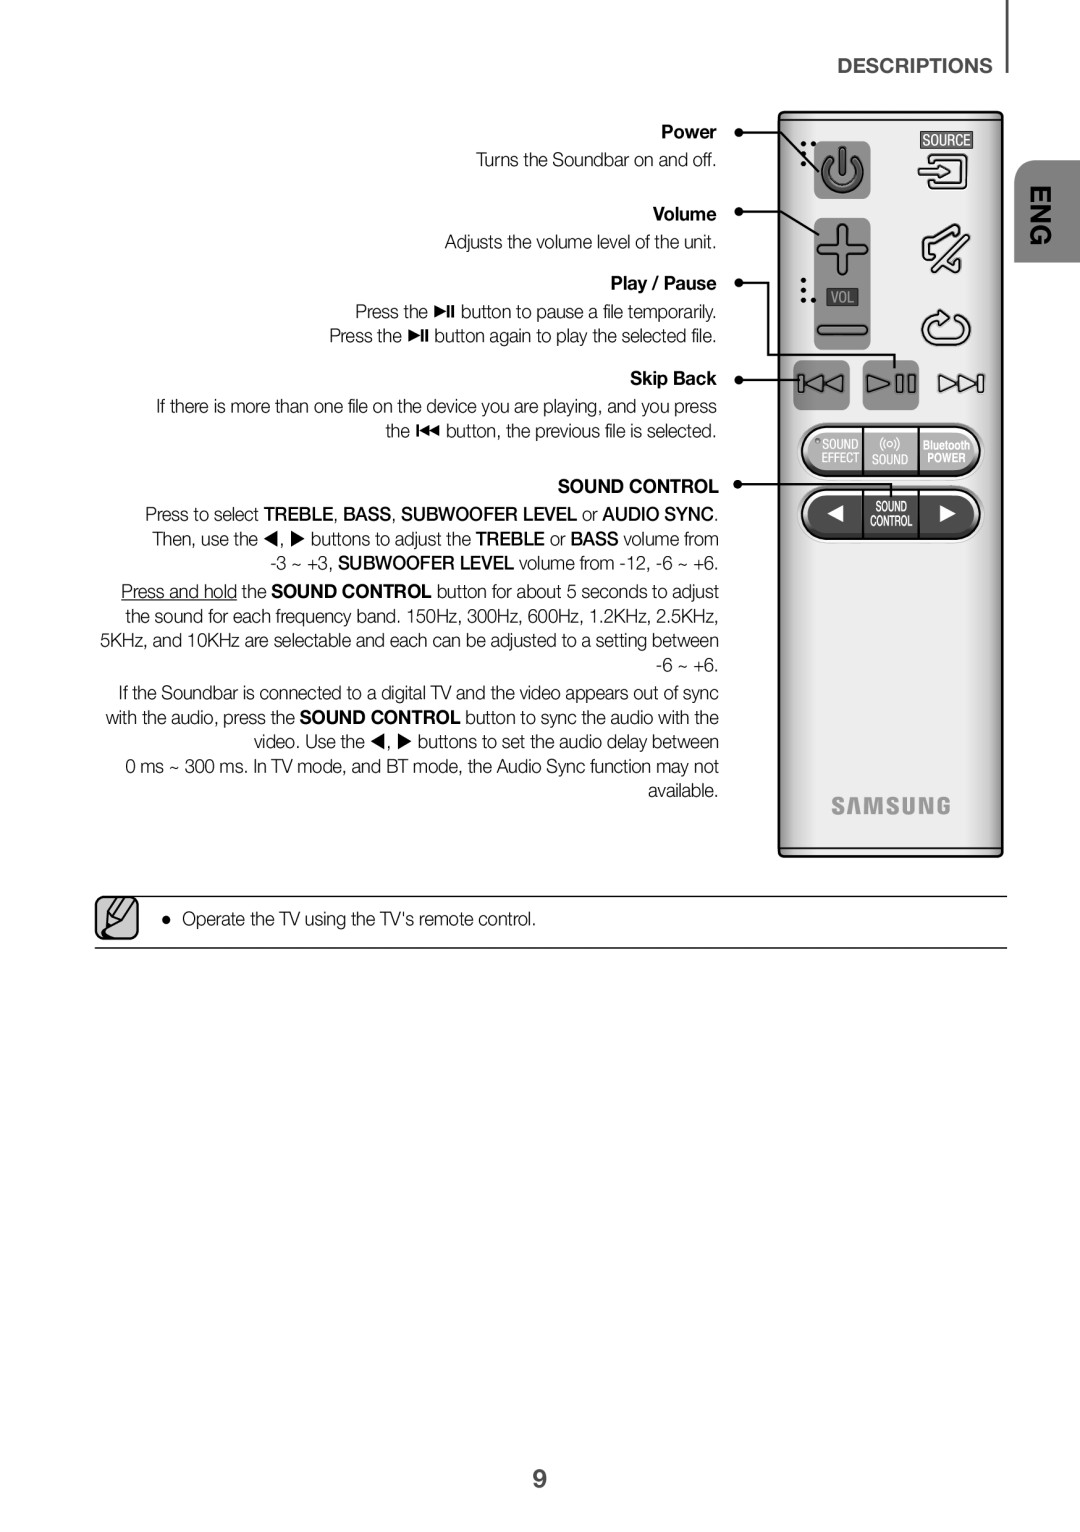 Samsung HW-K650/EN, HW-K651/EN, HW-K651/ZF, HW-K650/ZF, HW-K660/XE, HW-K661/XE, HW-K651/XN manual Descriptions, Power, Volume 